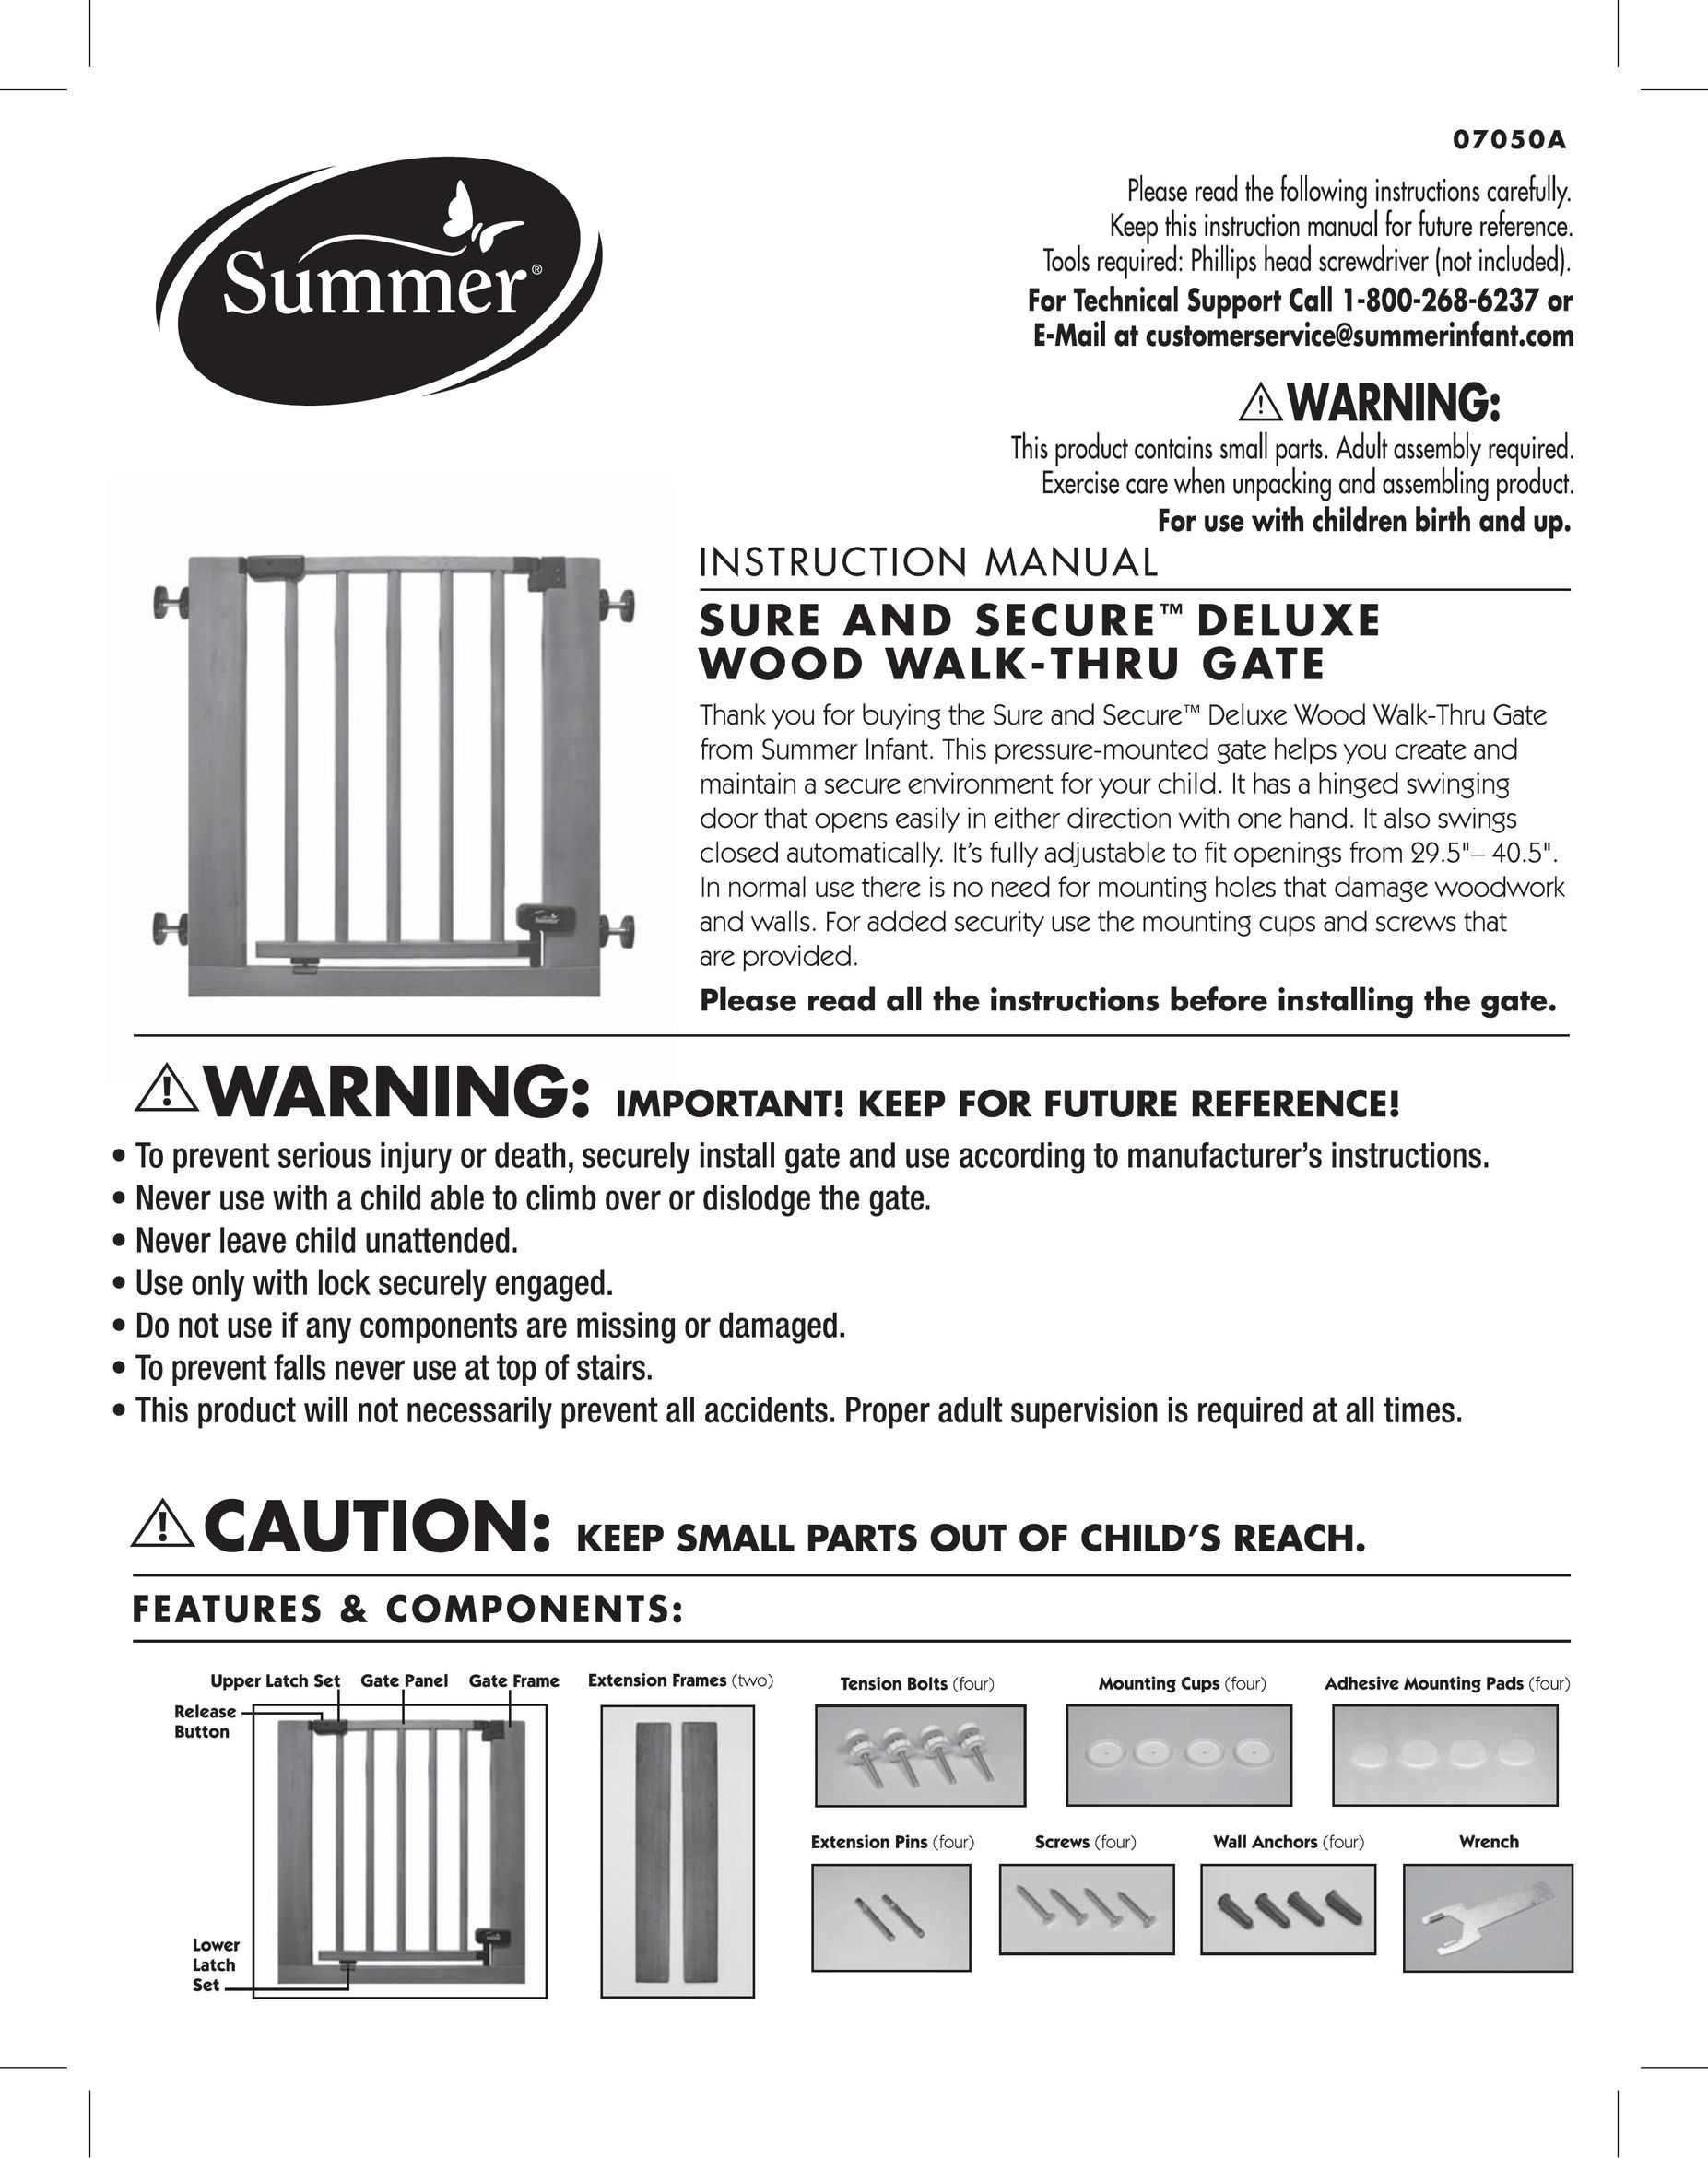 Summer Infant 07050A Safety Gate User Manual